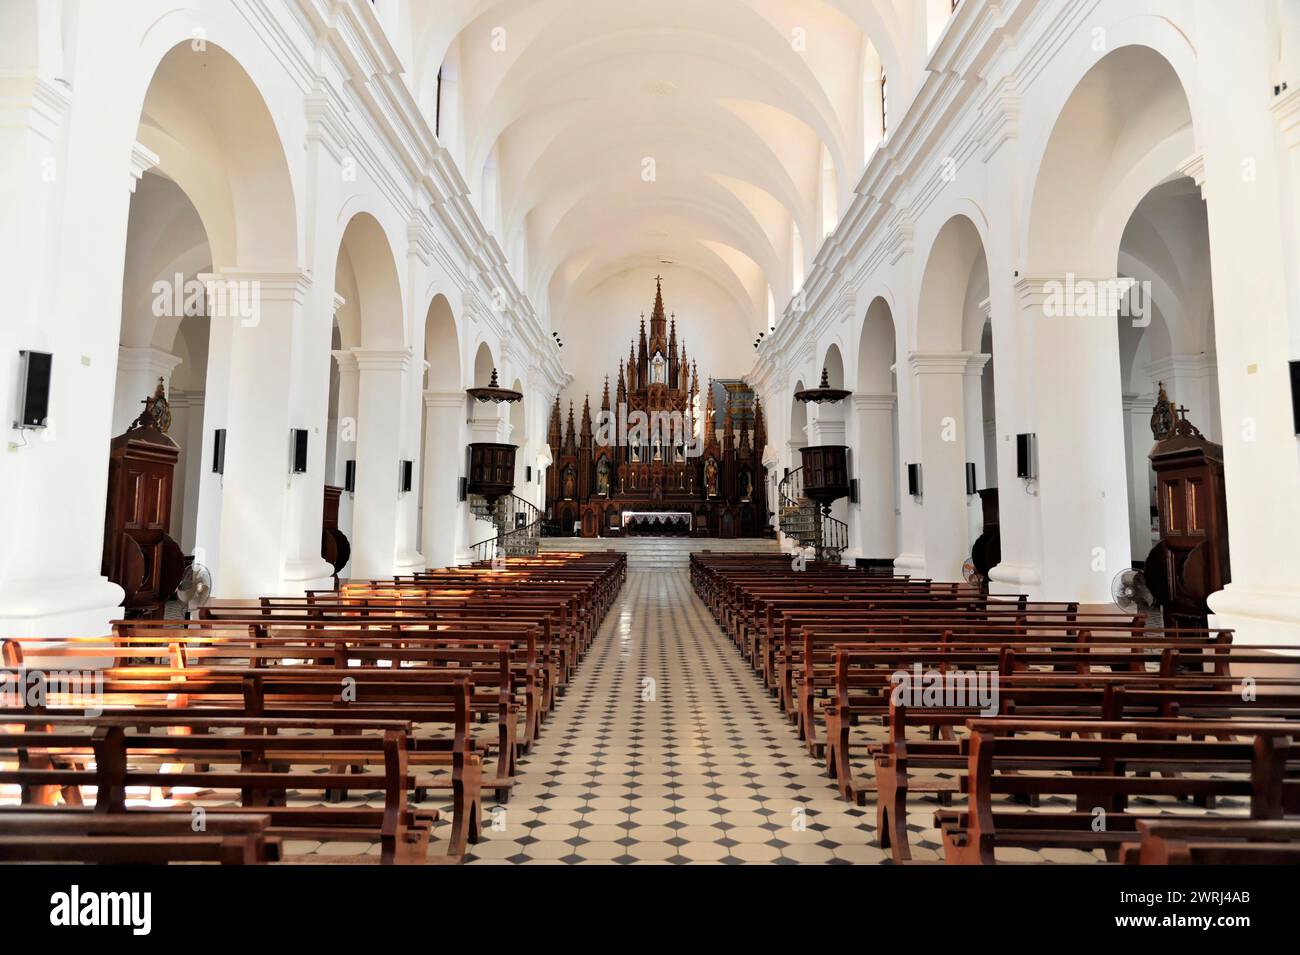 Spacious interior of a Catholic church with Gothic design elements, Trinidad, Cuba, Central America Stock Photo